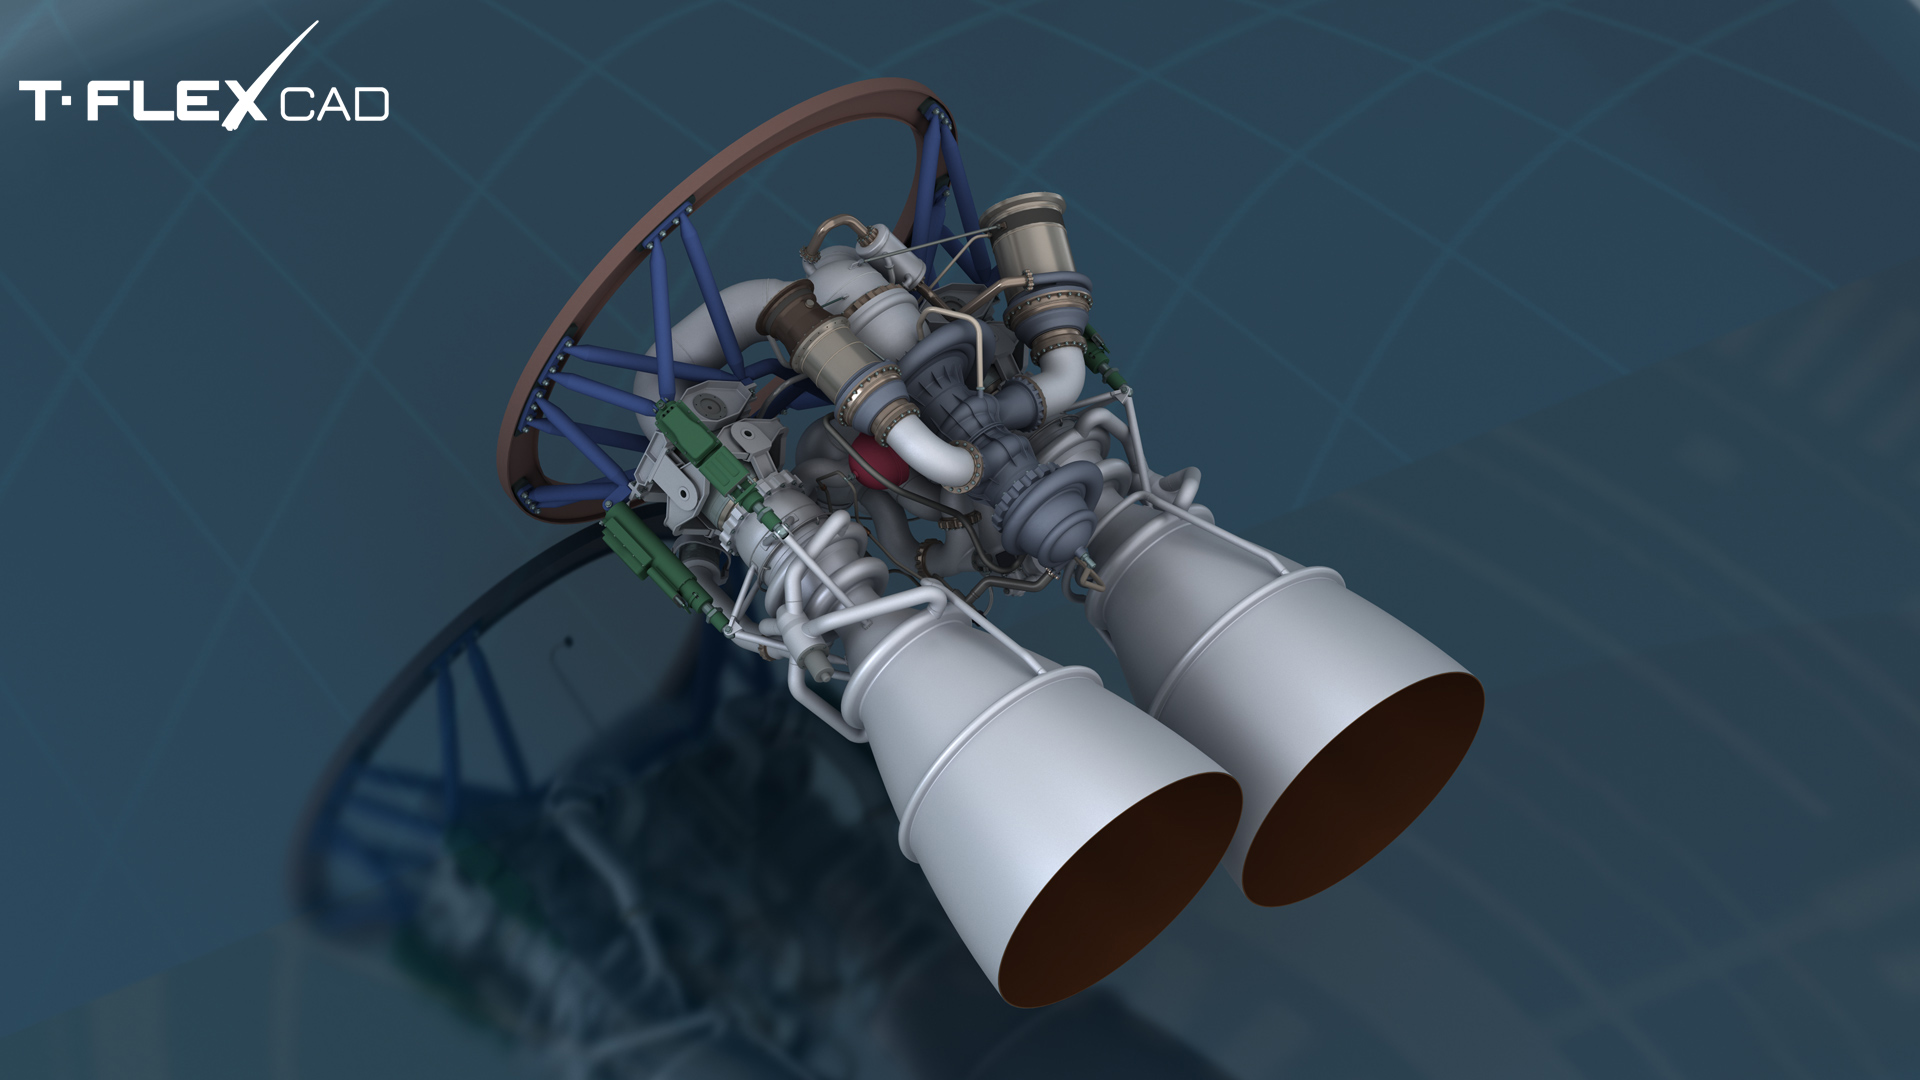 Aerospace - Rocket Engine RD 180